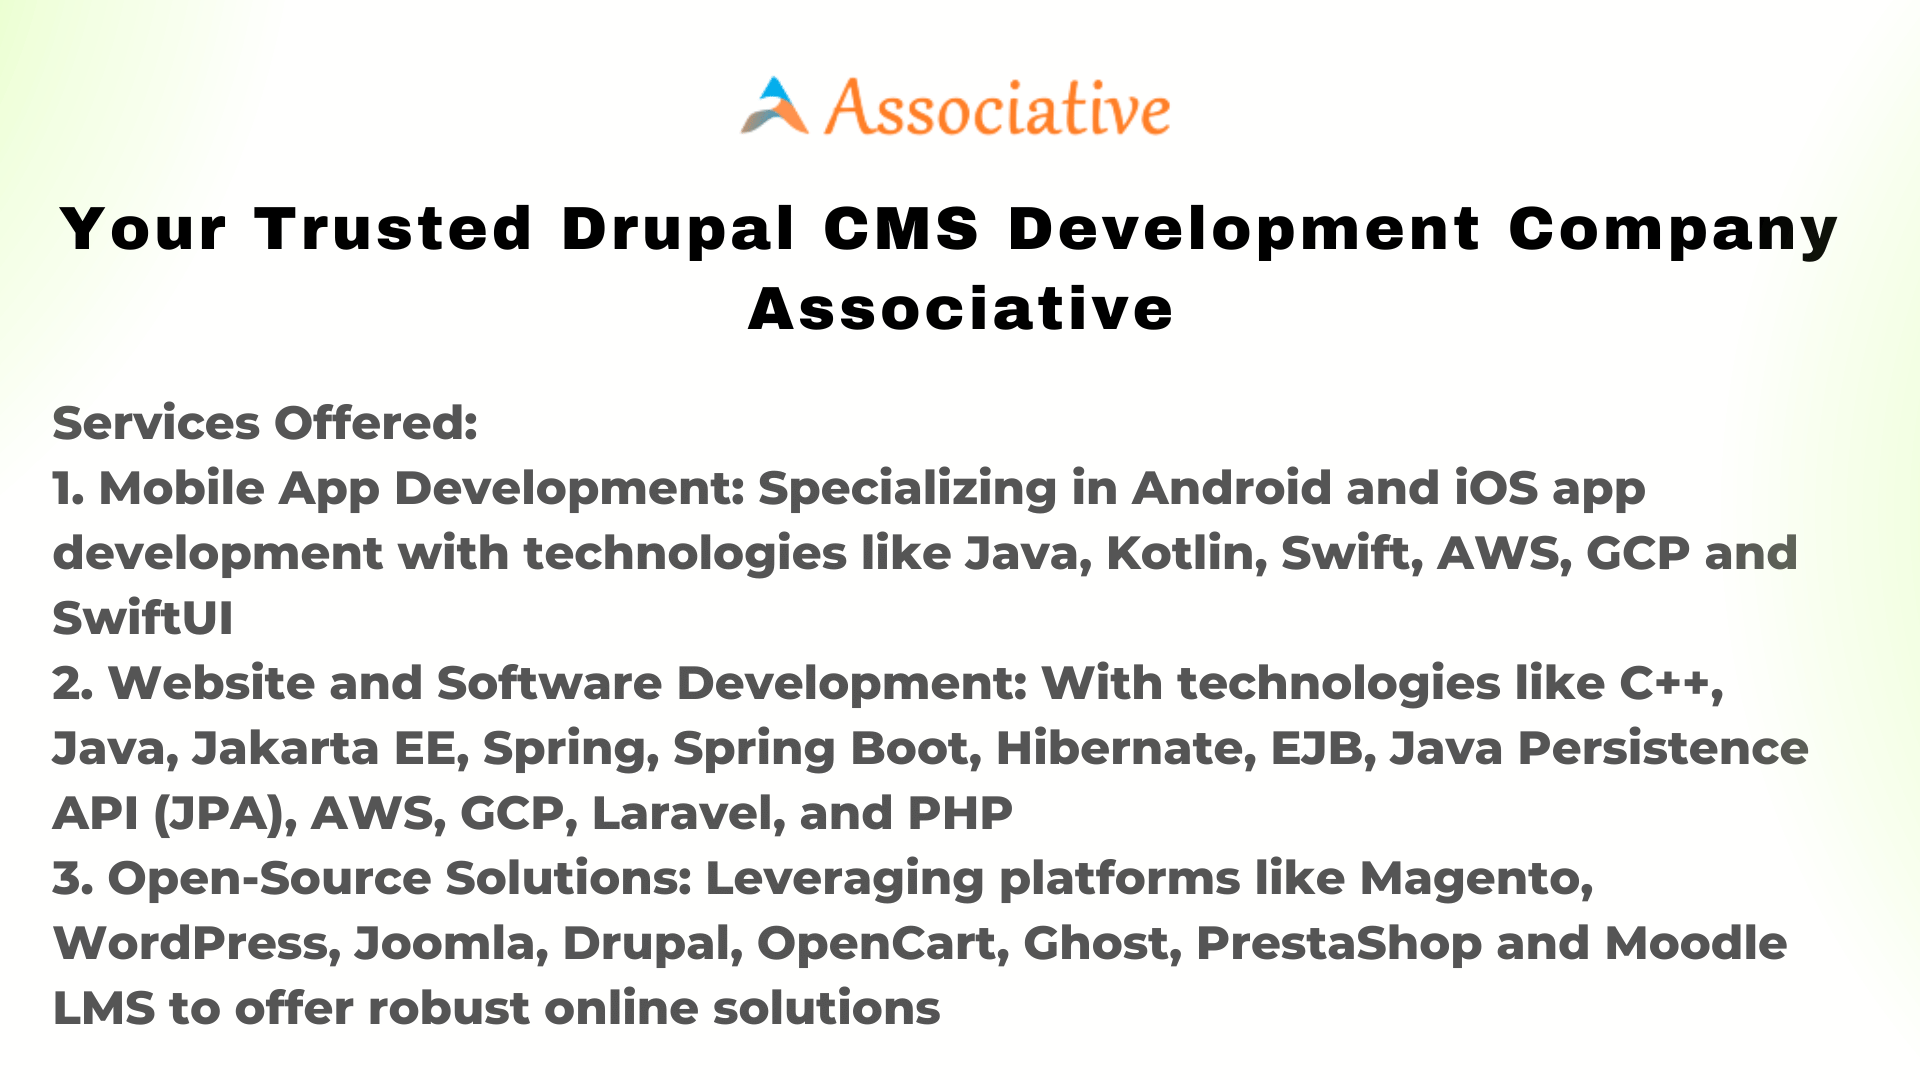 Your Trusted Drupal CMS Development Company Associative